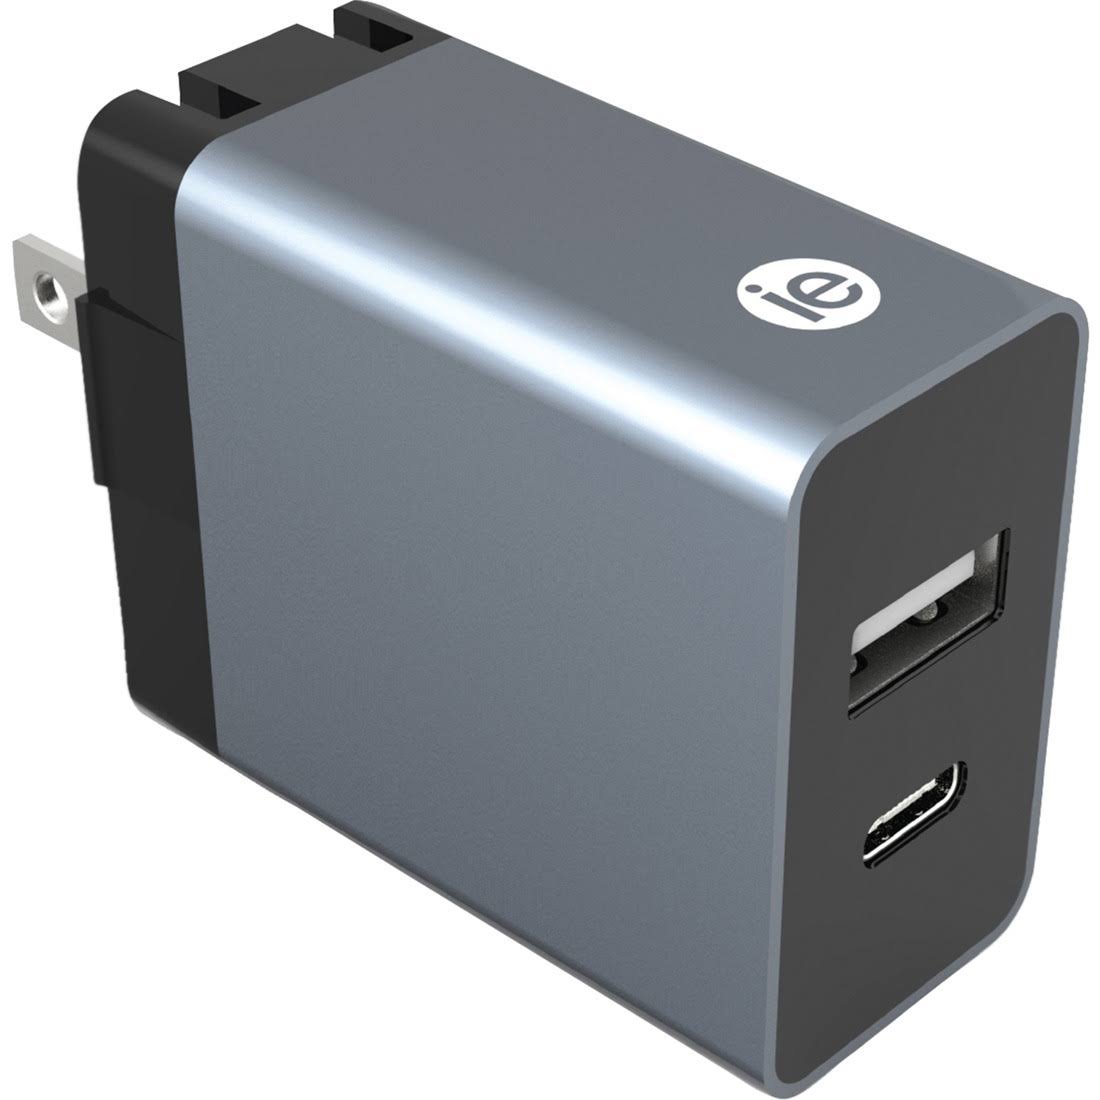 Iessentials Ien-ac31a1c-wt Dual-USB Wall Charger - Black/Grey